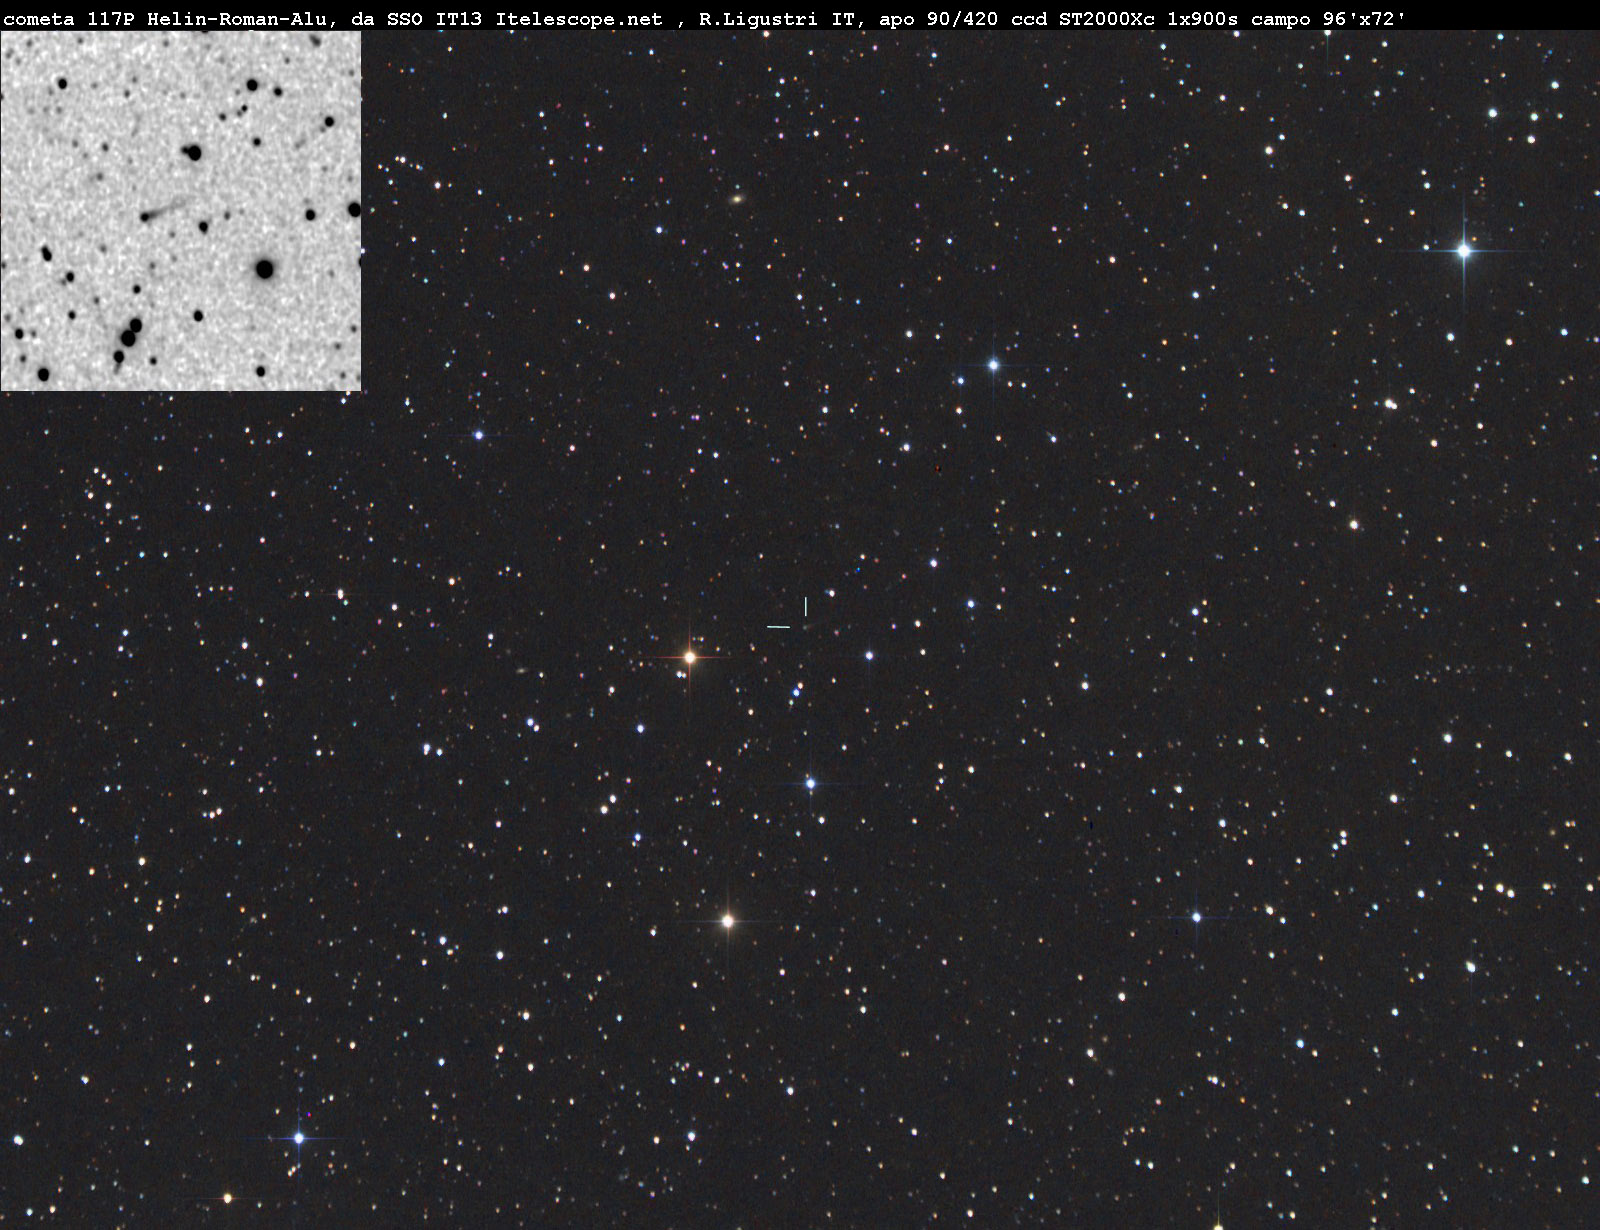 Comet 117P/Helin-Roman-Alu photographed in march 15, 2013: 374 KB